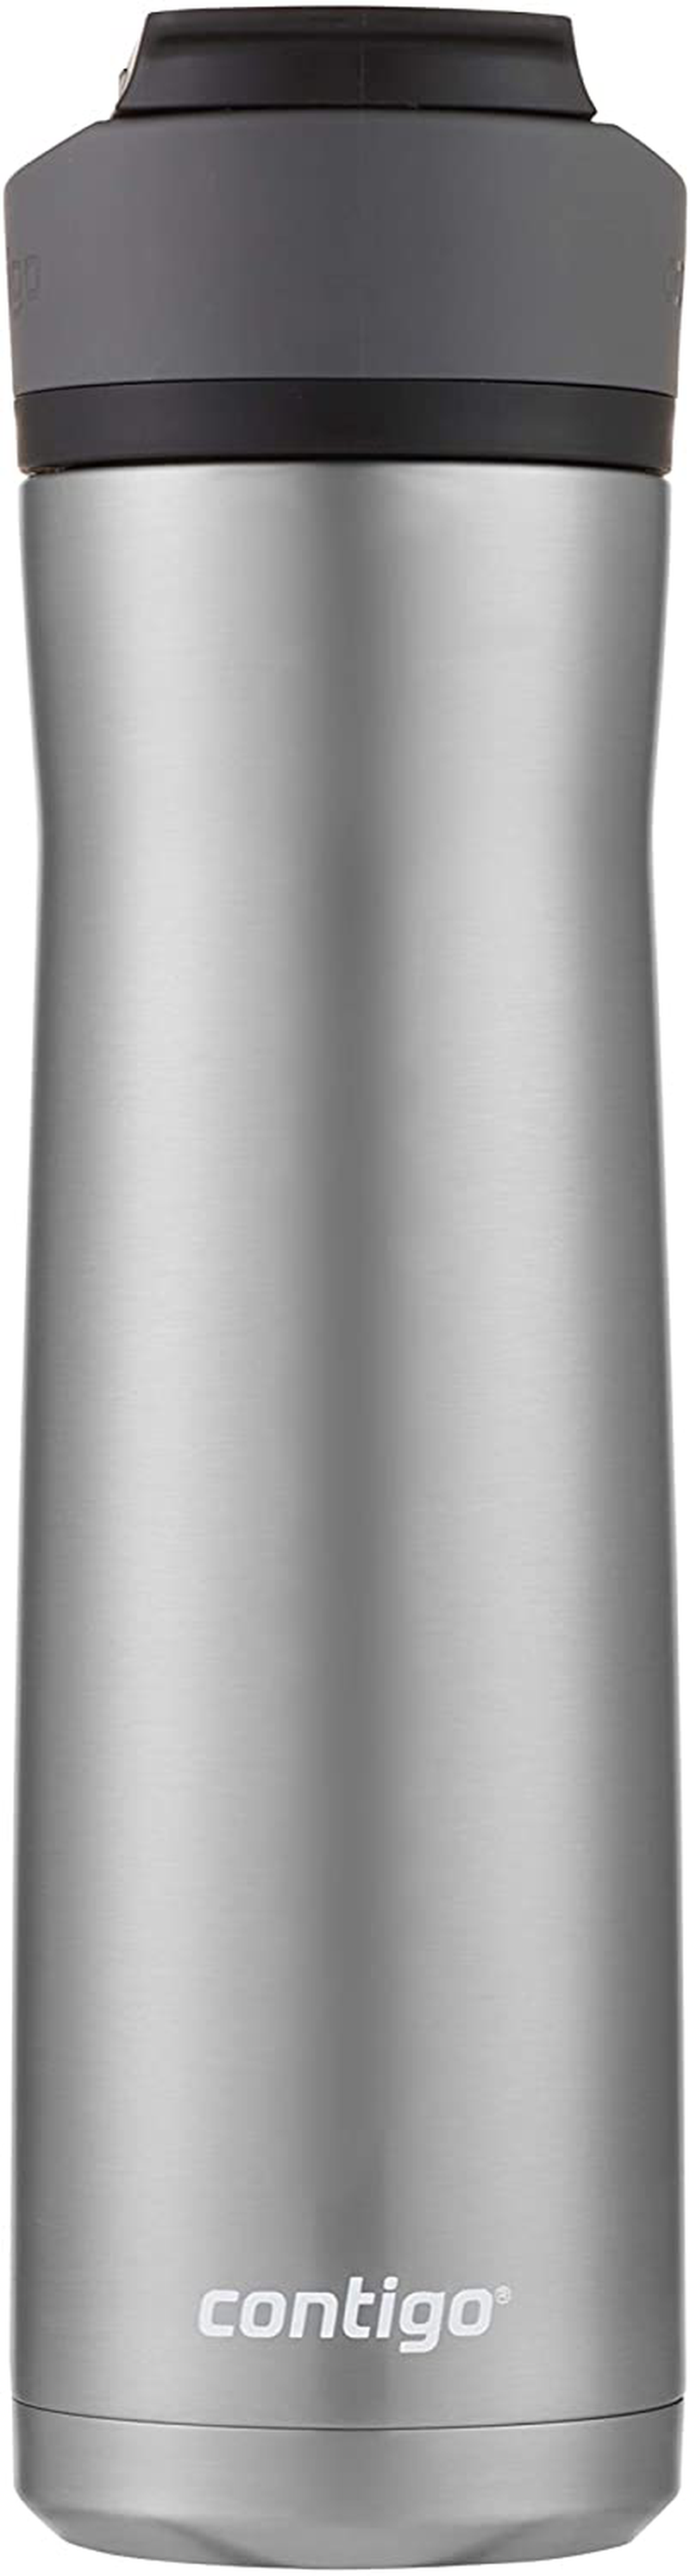 Contigo AUTOSPOUT Straw Ashland Chill Stainless Steel Water Bottle, 20 oz, Sangria AND Stainless Steel Water Bottle | Vacuum-Insulated Water Bottle | AUTOSPOUT Ashland Chill Water Bottle